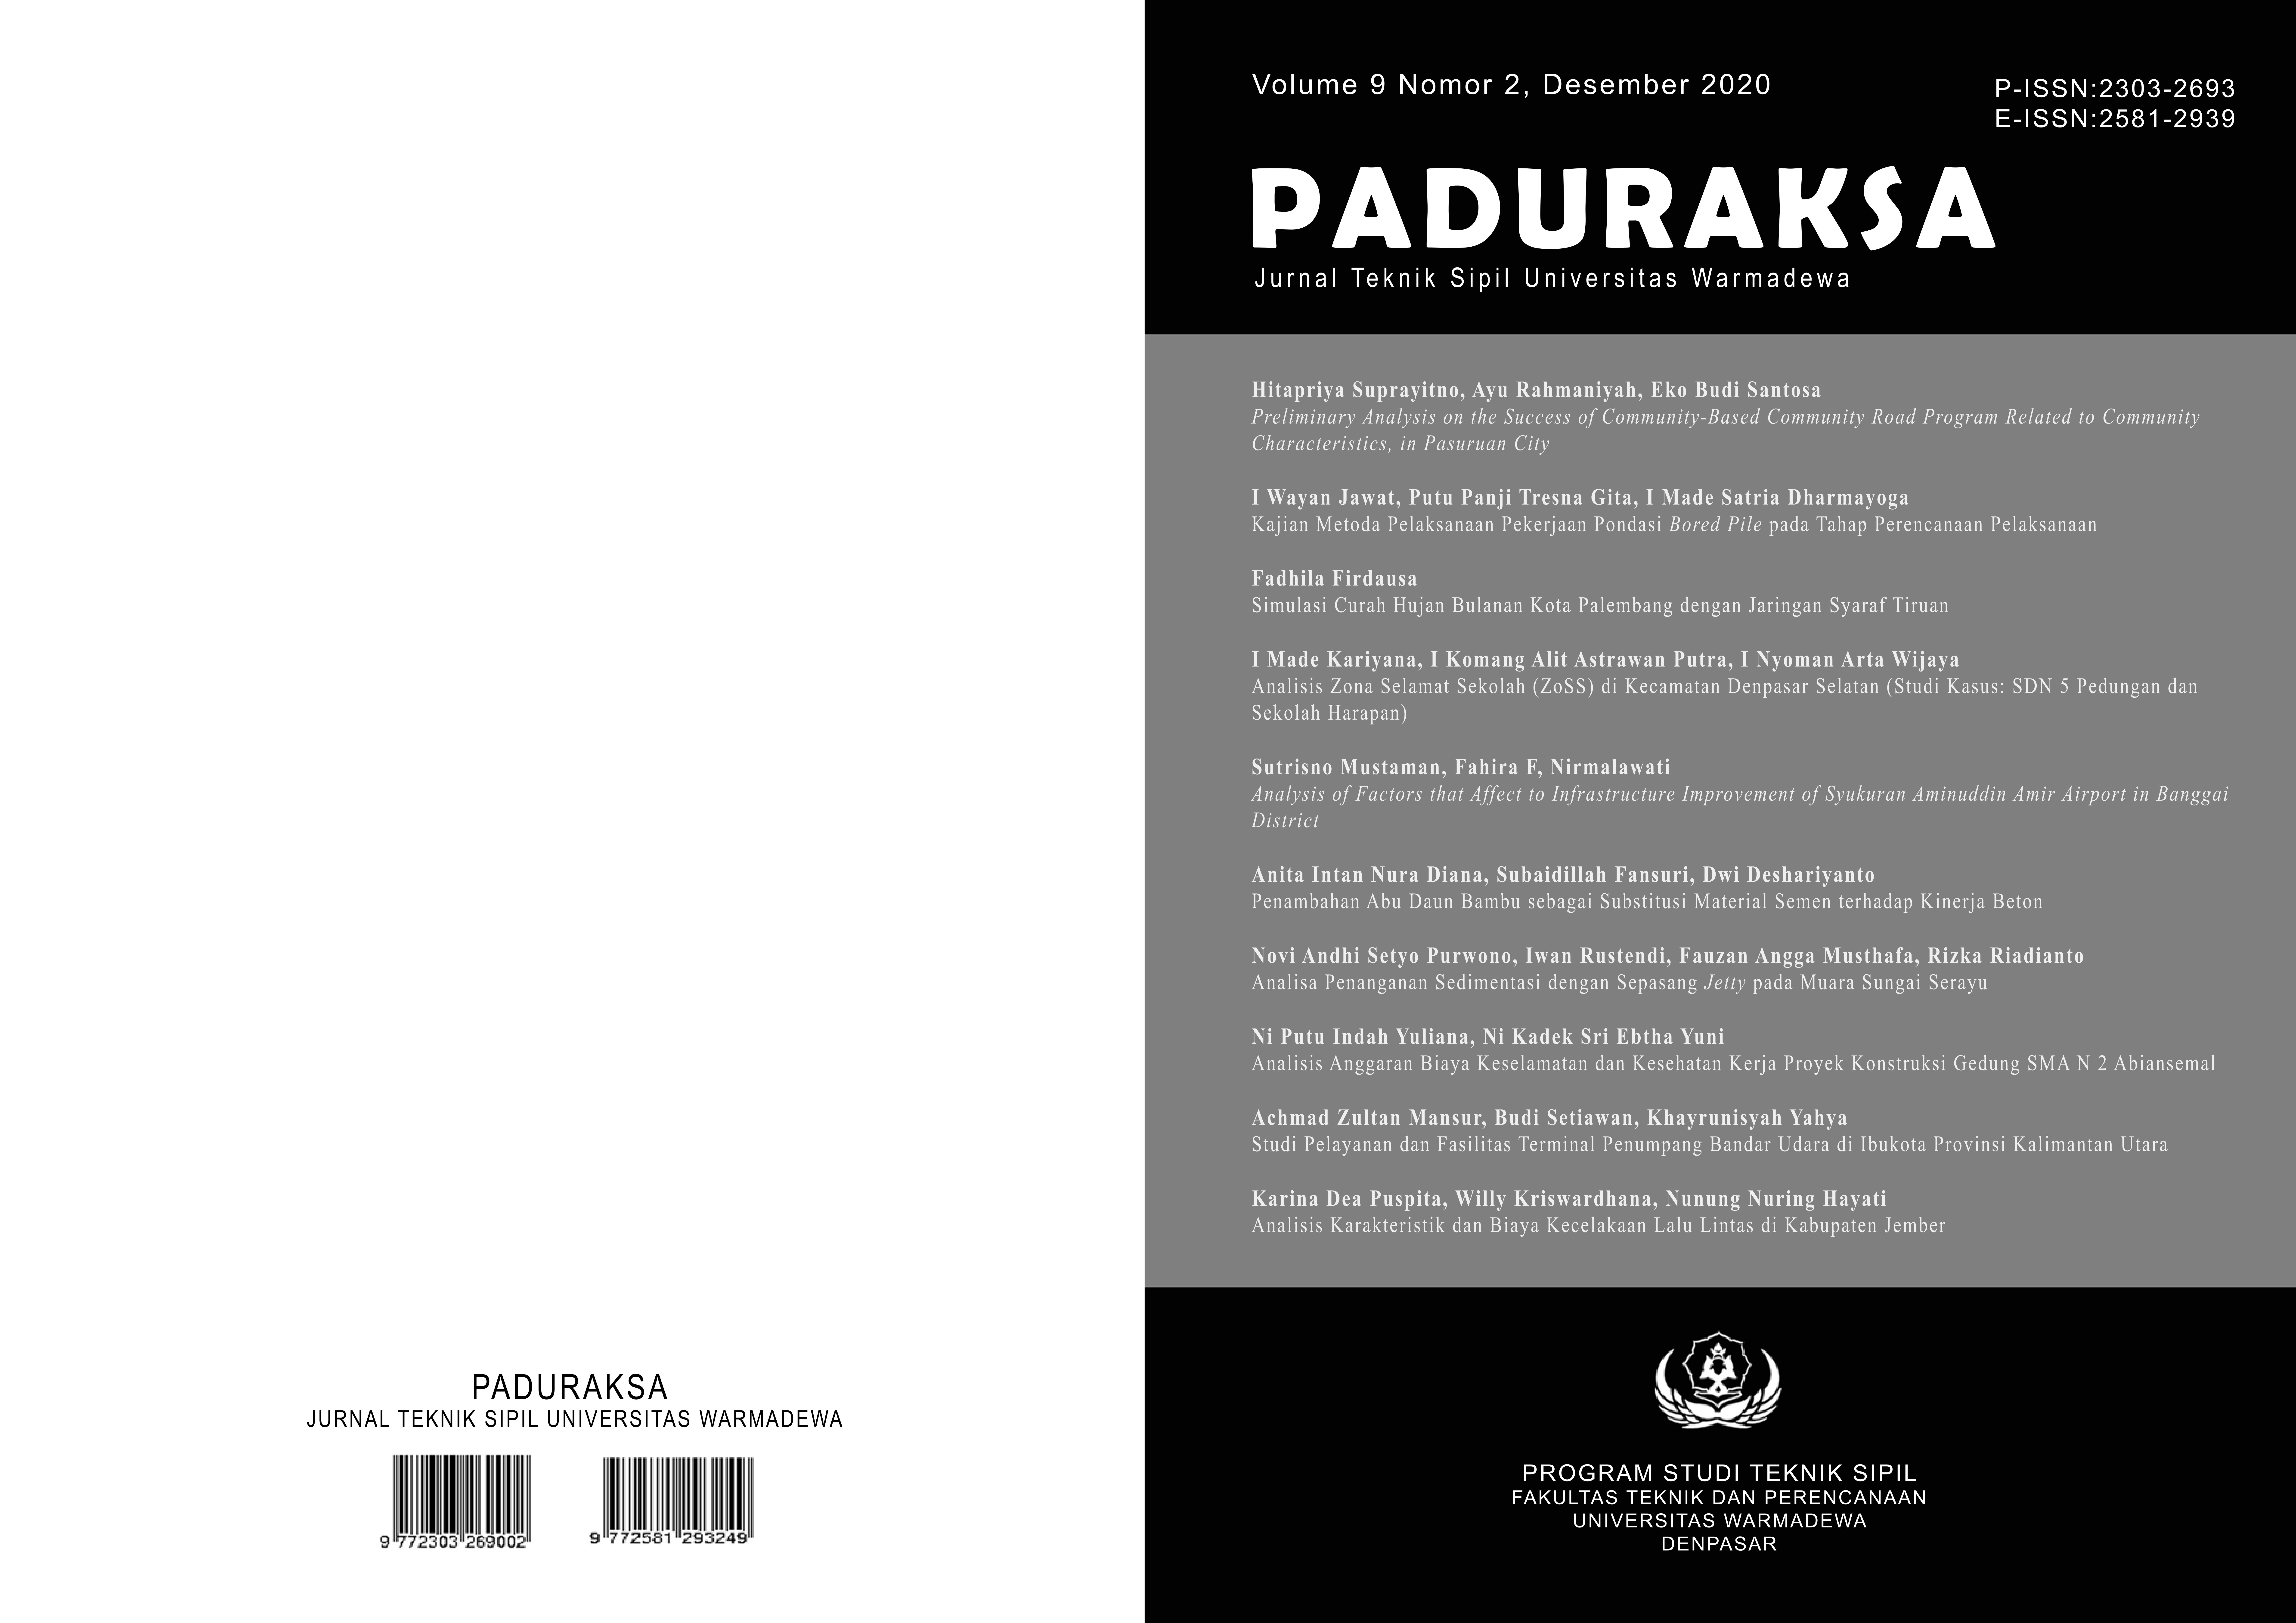 Cover of  journal "Paduraksa: Jurnal Teknik Sipil Universitas Warmadewa" Volume 9 Number 2 December 2020.